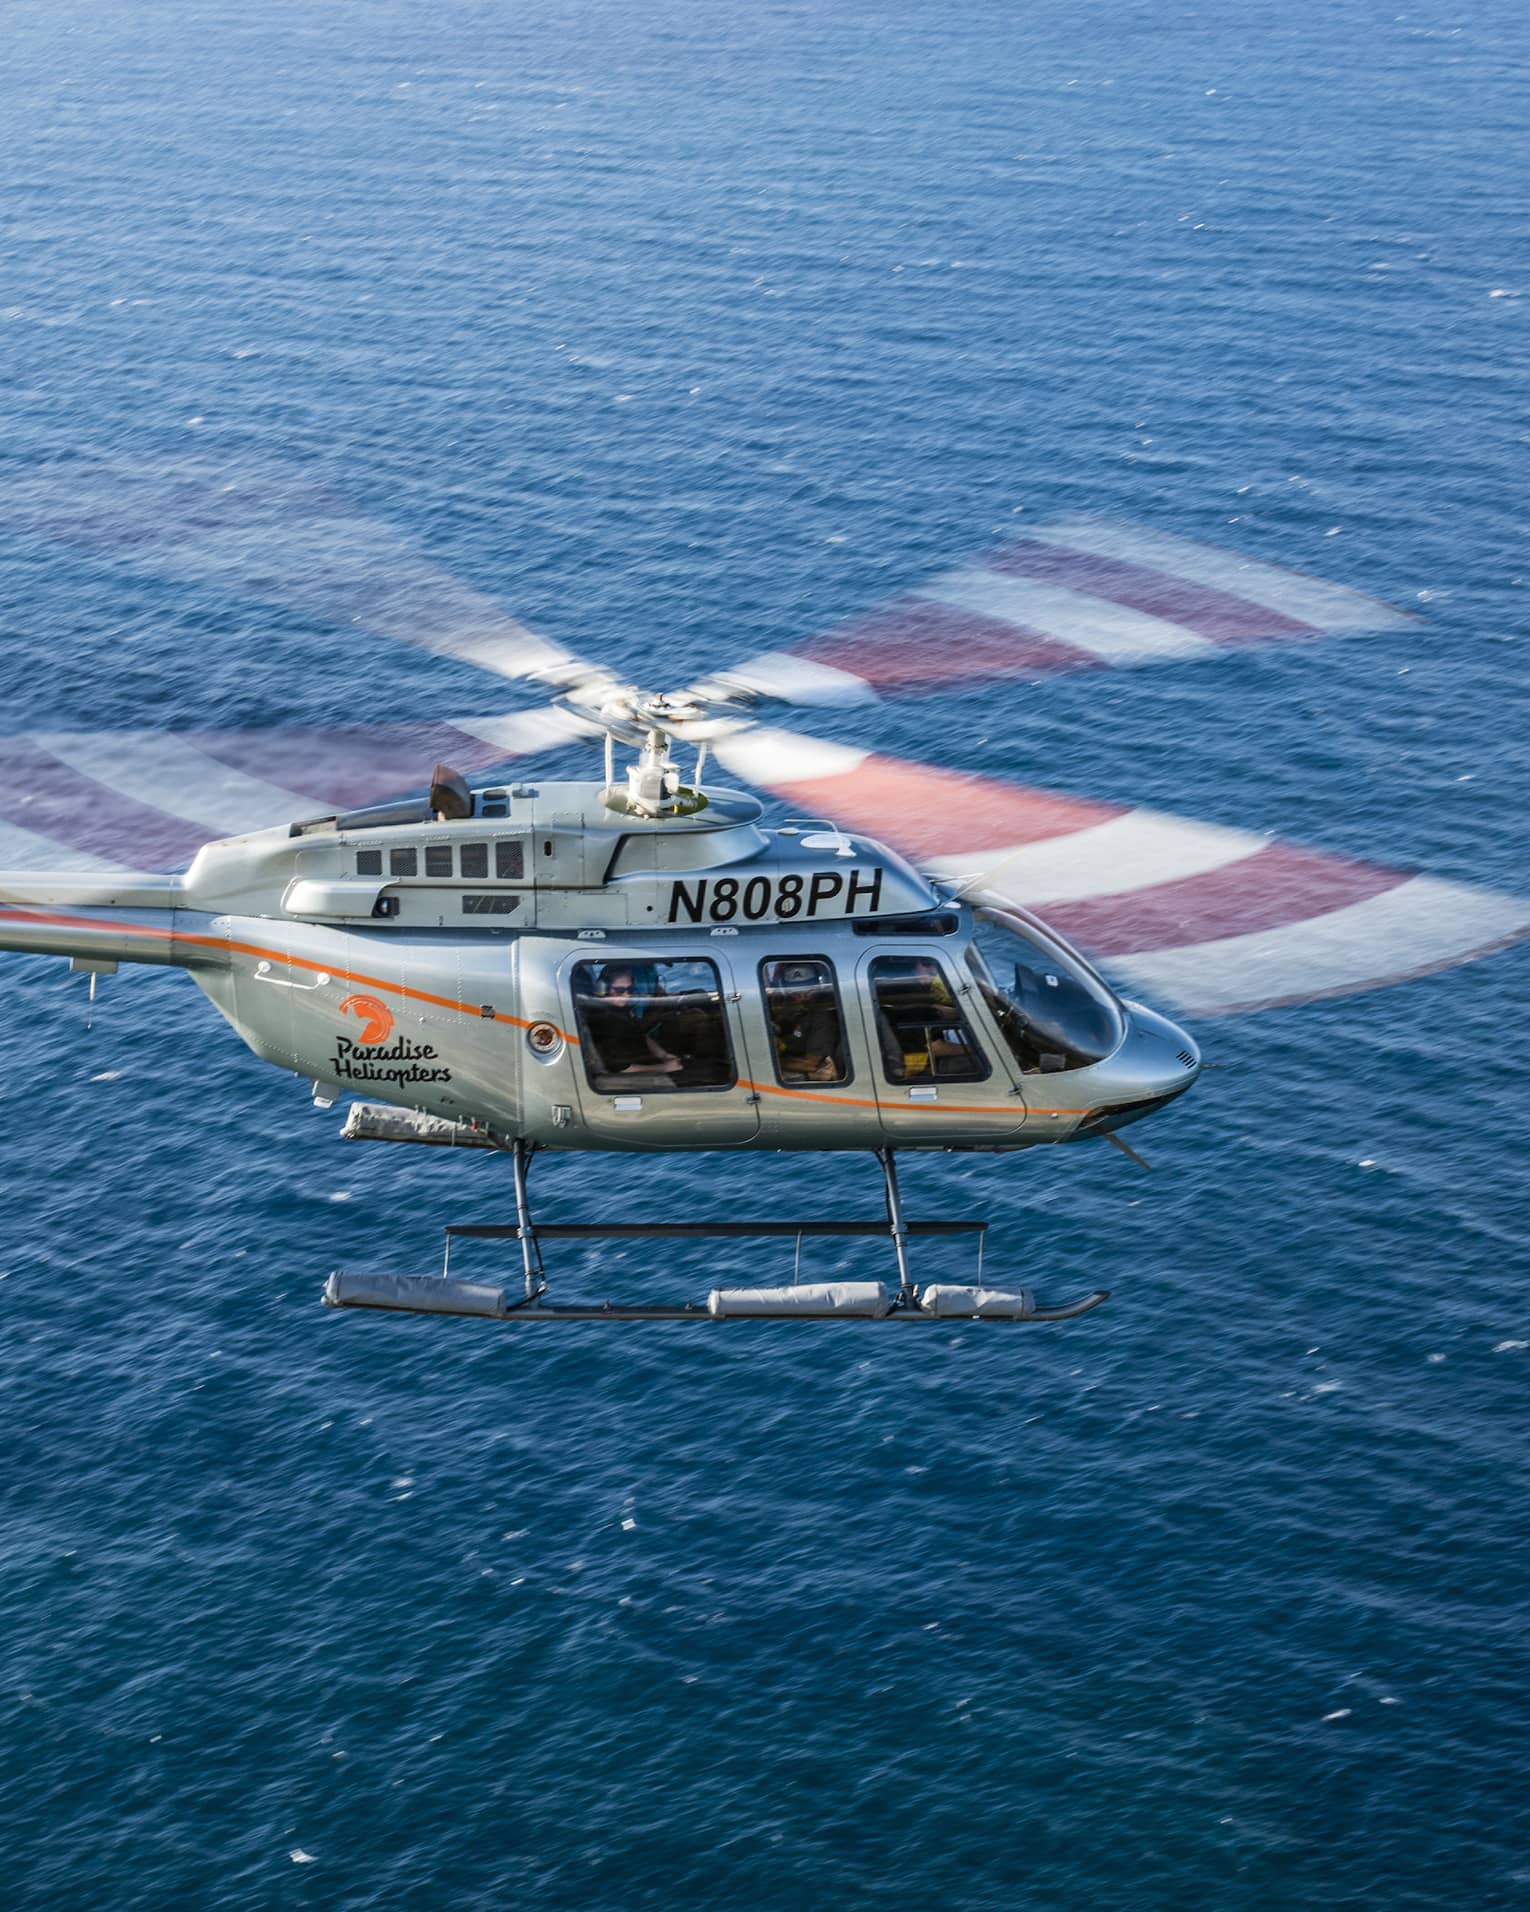 Helicopter flying over blue ocean